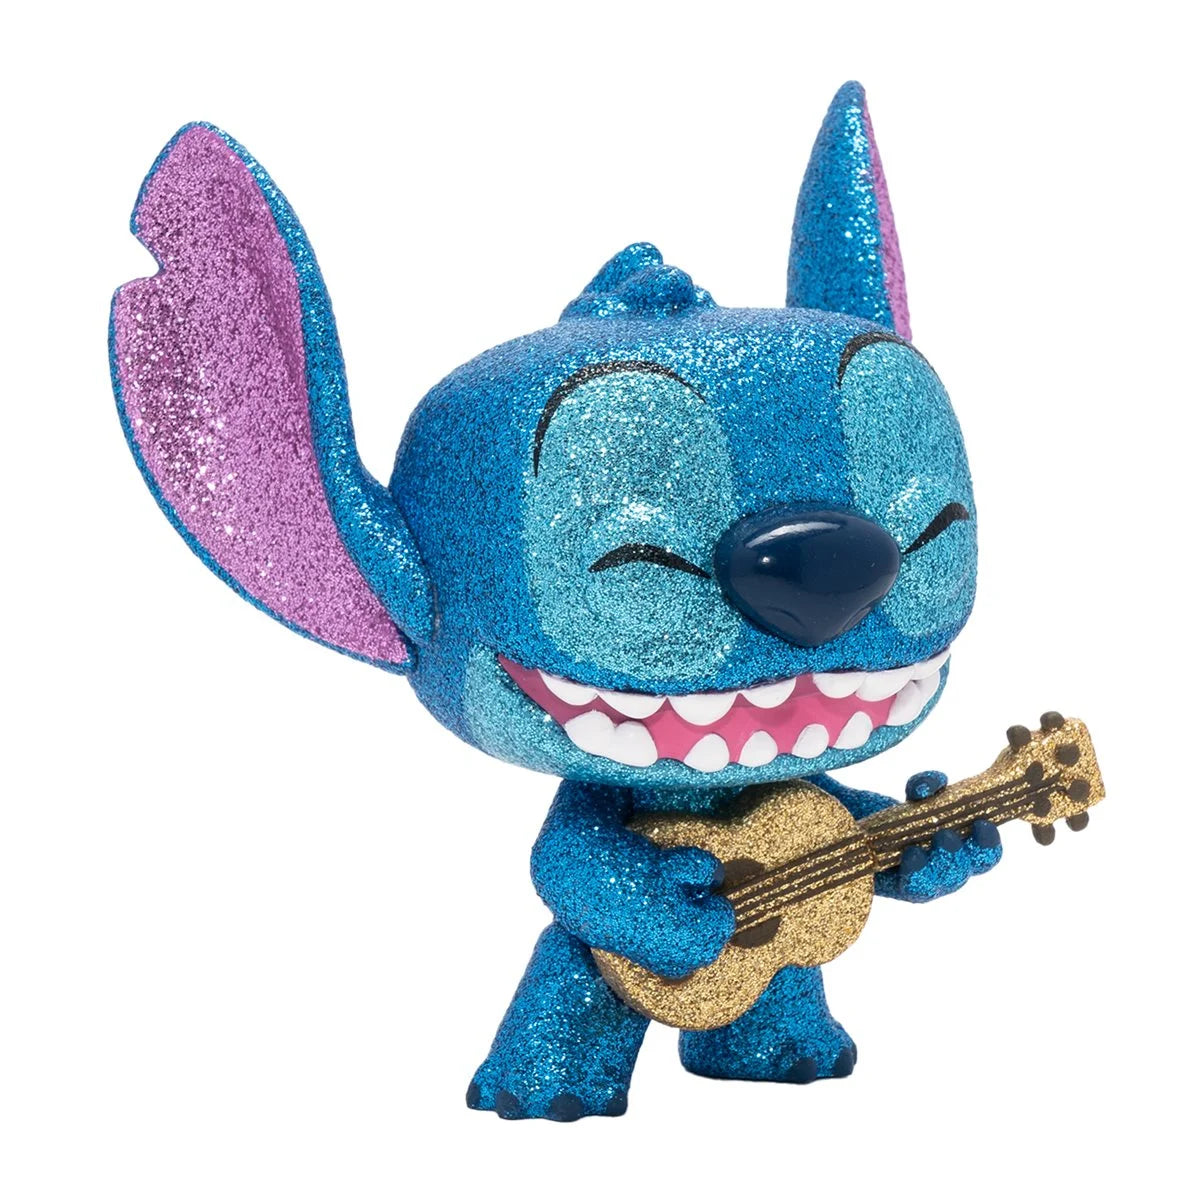 Stitch with ukulele from Lilo & Stitch Diamond Glitter vinyl figure